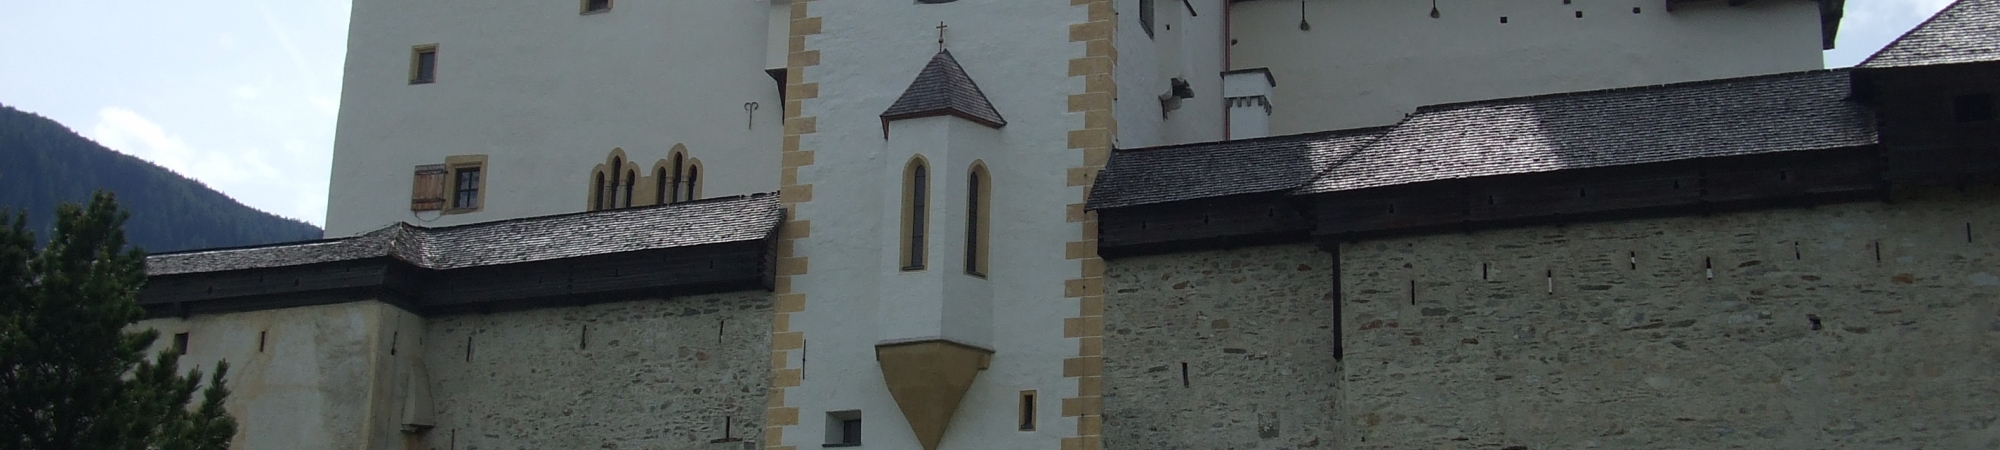 Castle Mauterndorf